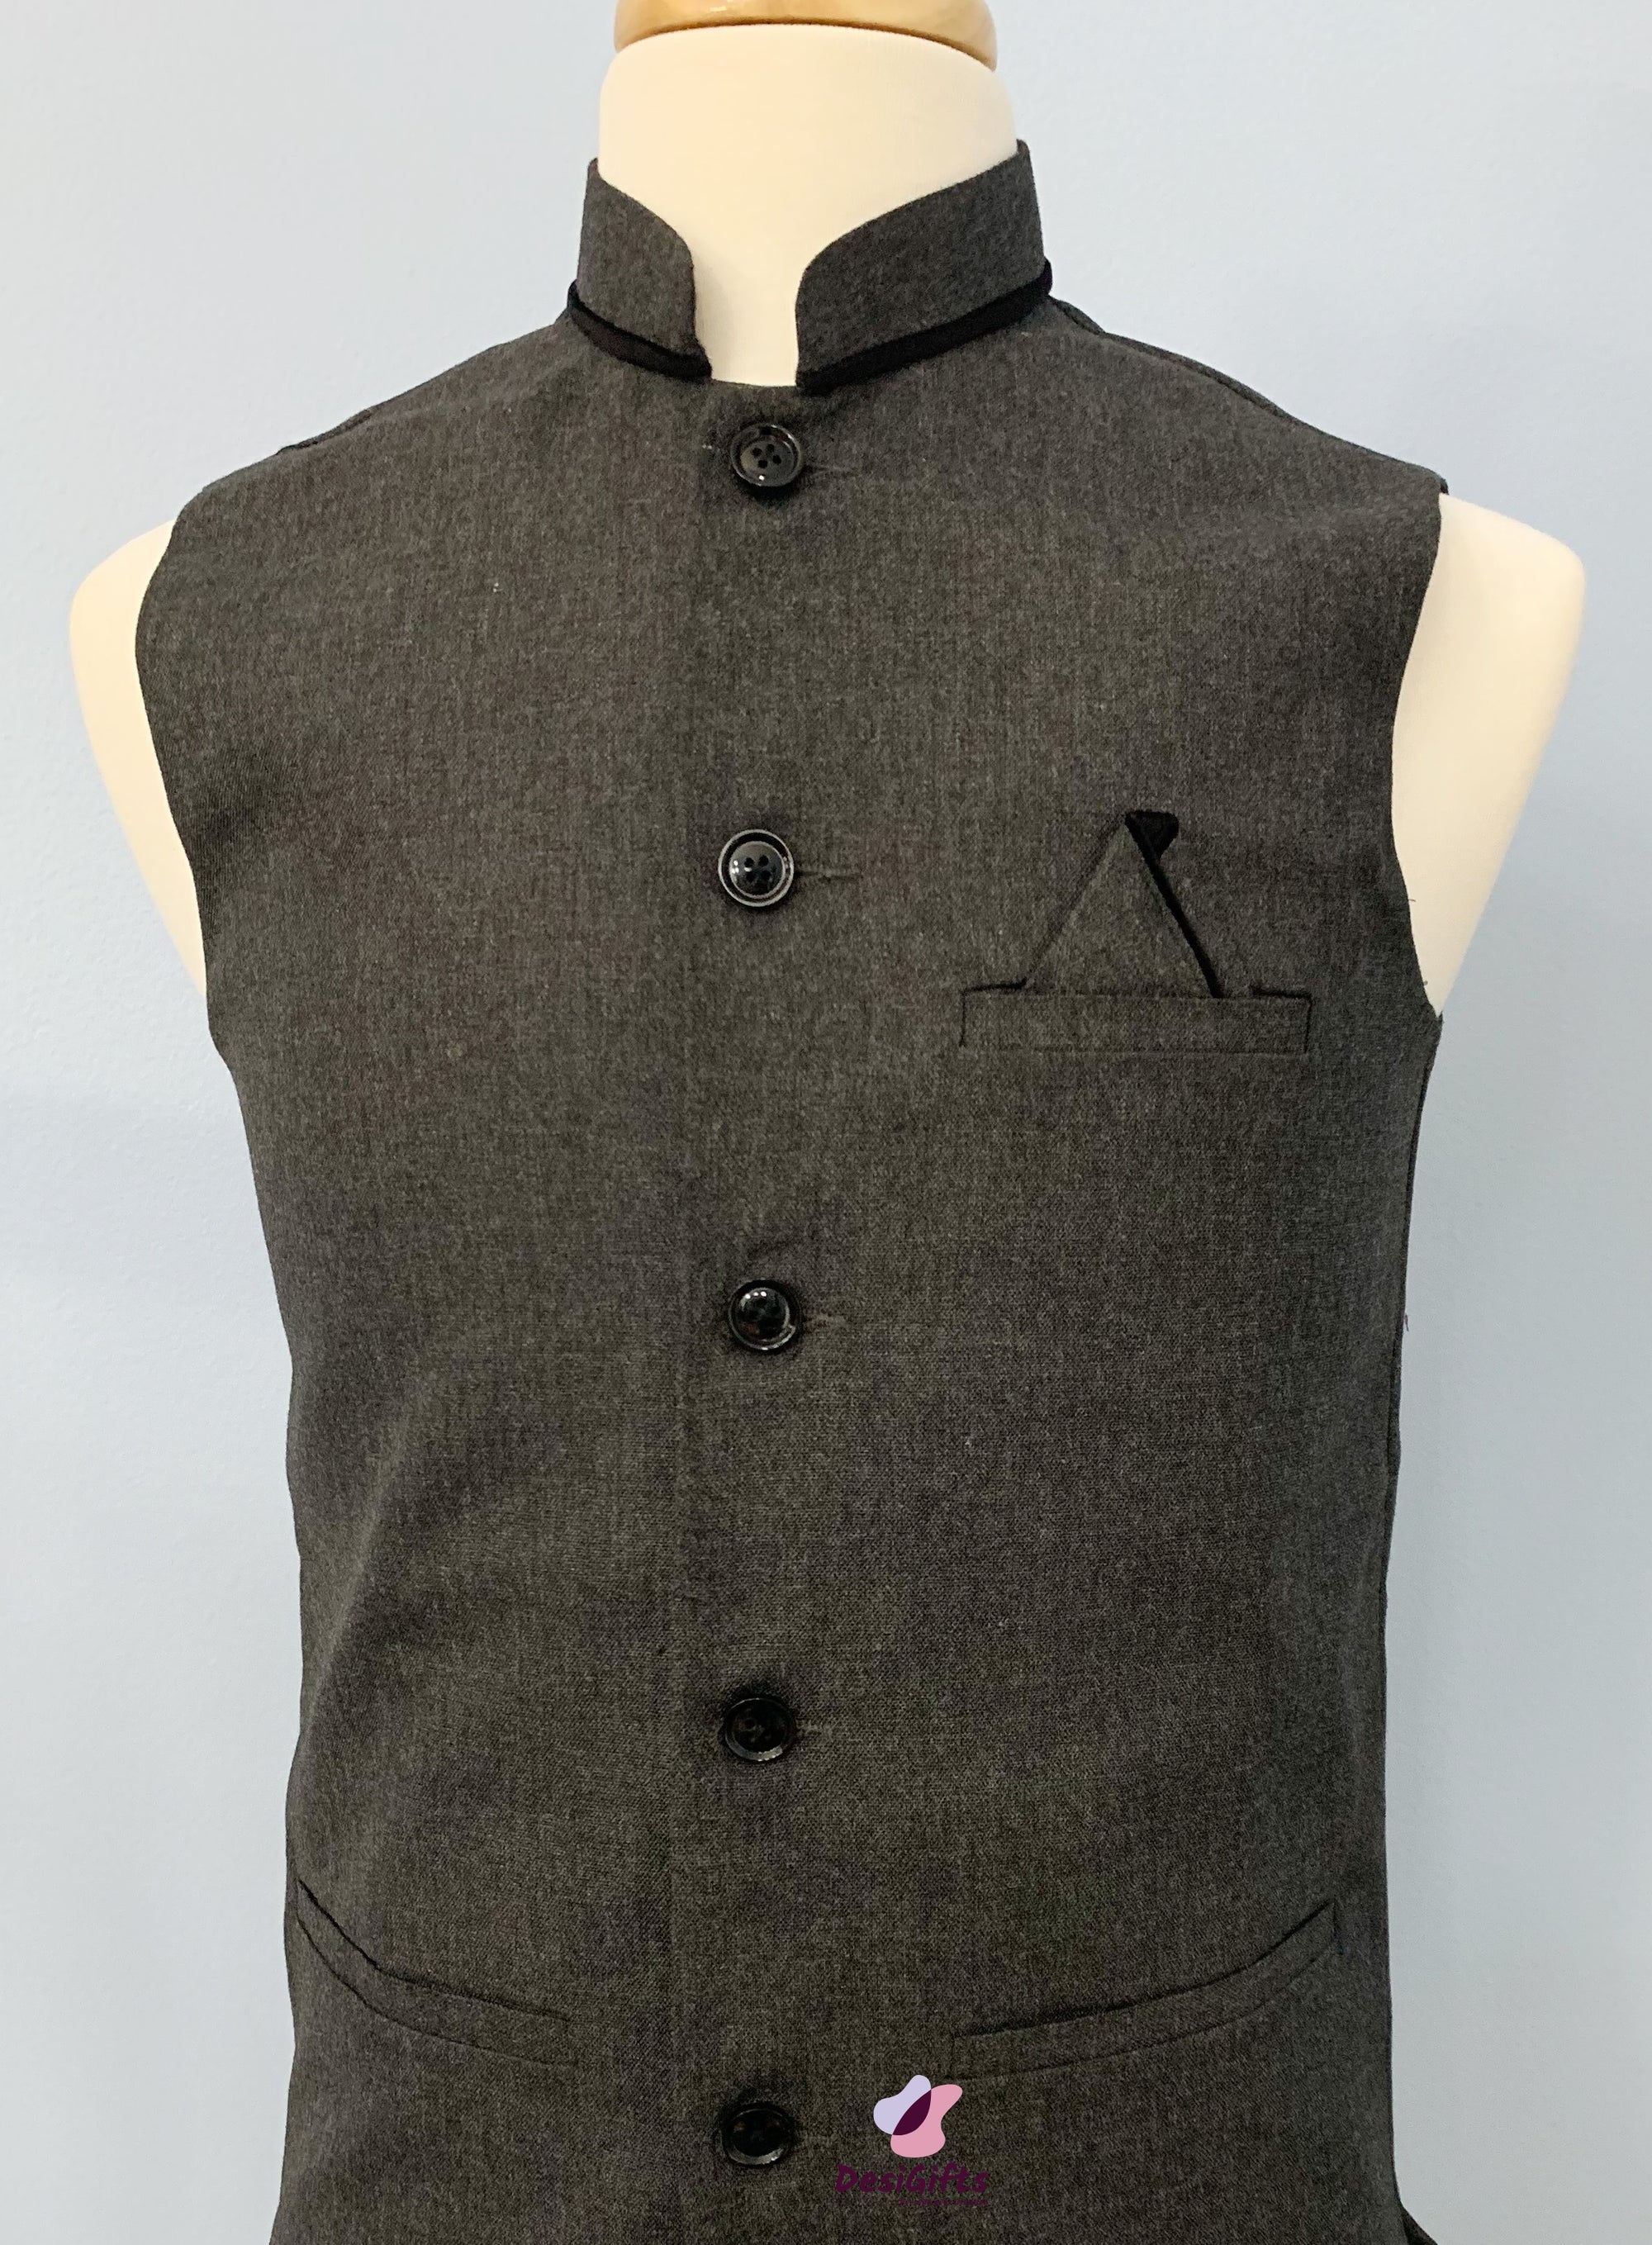 Plus Size Woven Jute Cotton Nehru Style Jacket / Sadri-Design, MJ#BLK 361